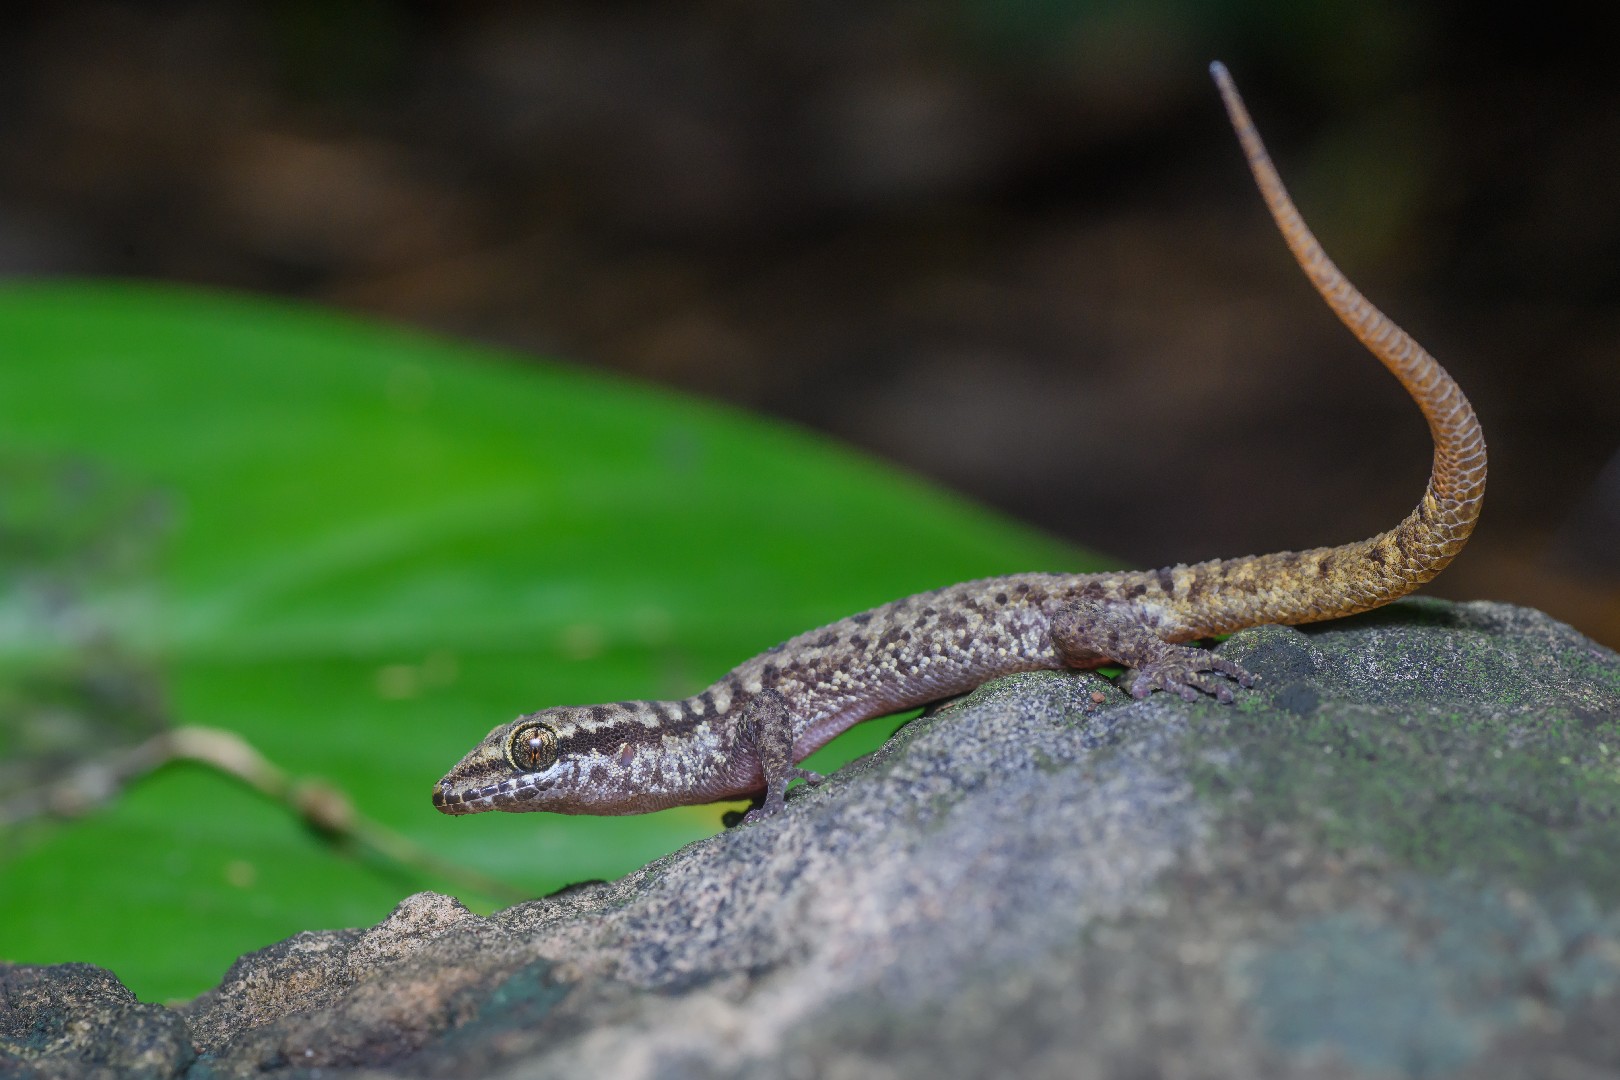 Southeast asian leaf-toed geckos (Dixonius)